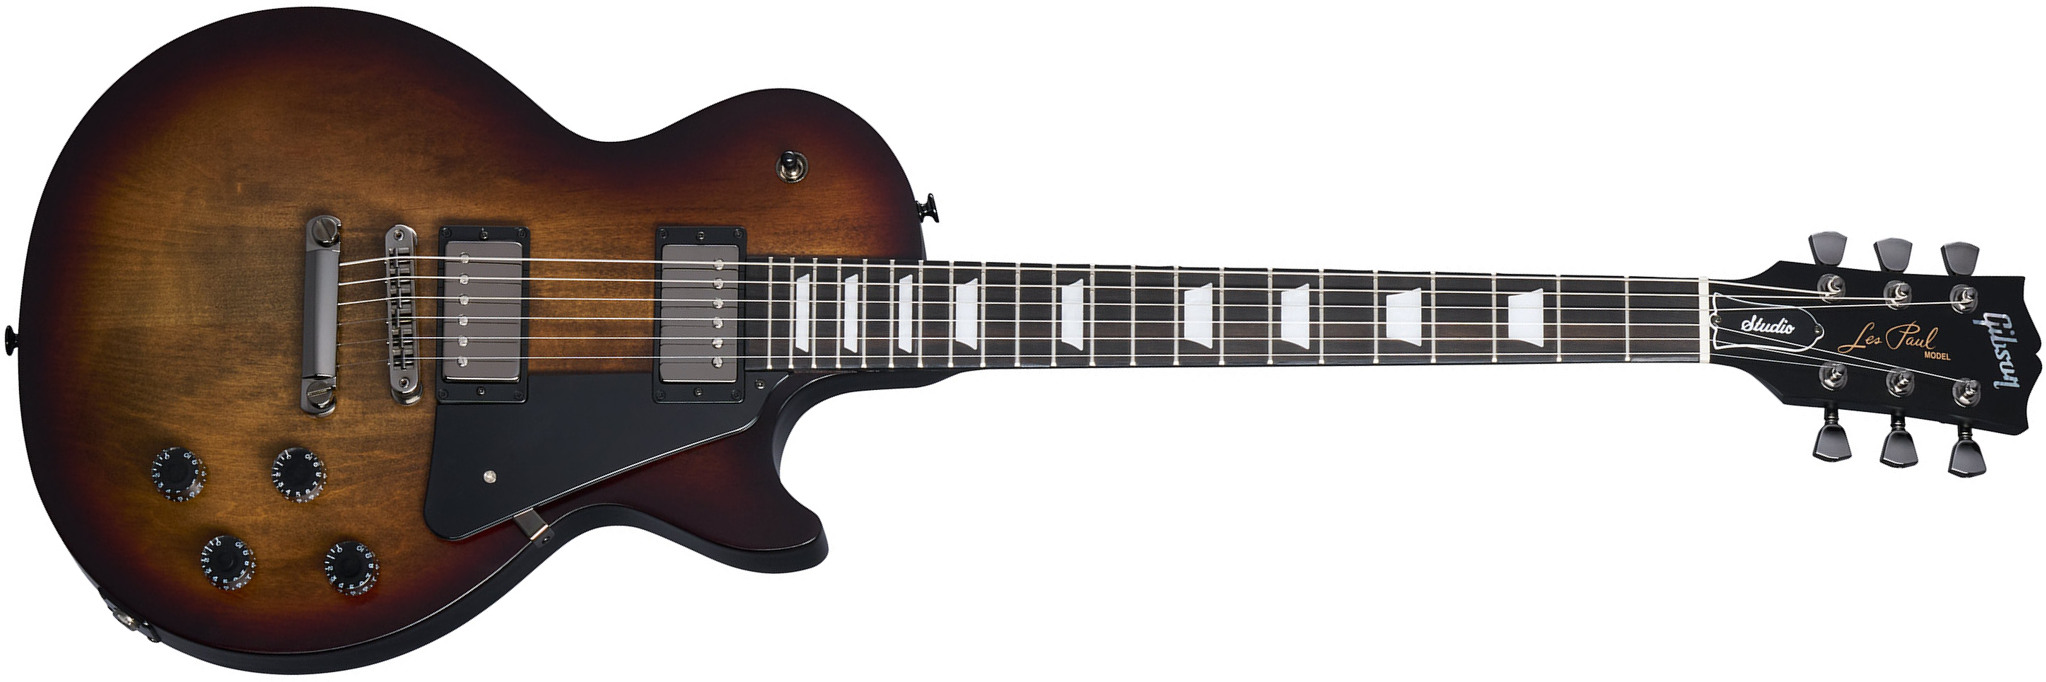 Gibson Les Paul Modern Studio Usa 2h Ht Eb - Smokehouse Satin - Single cut electric guitar - Main picture